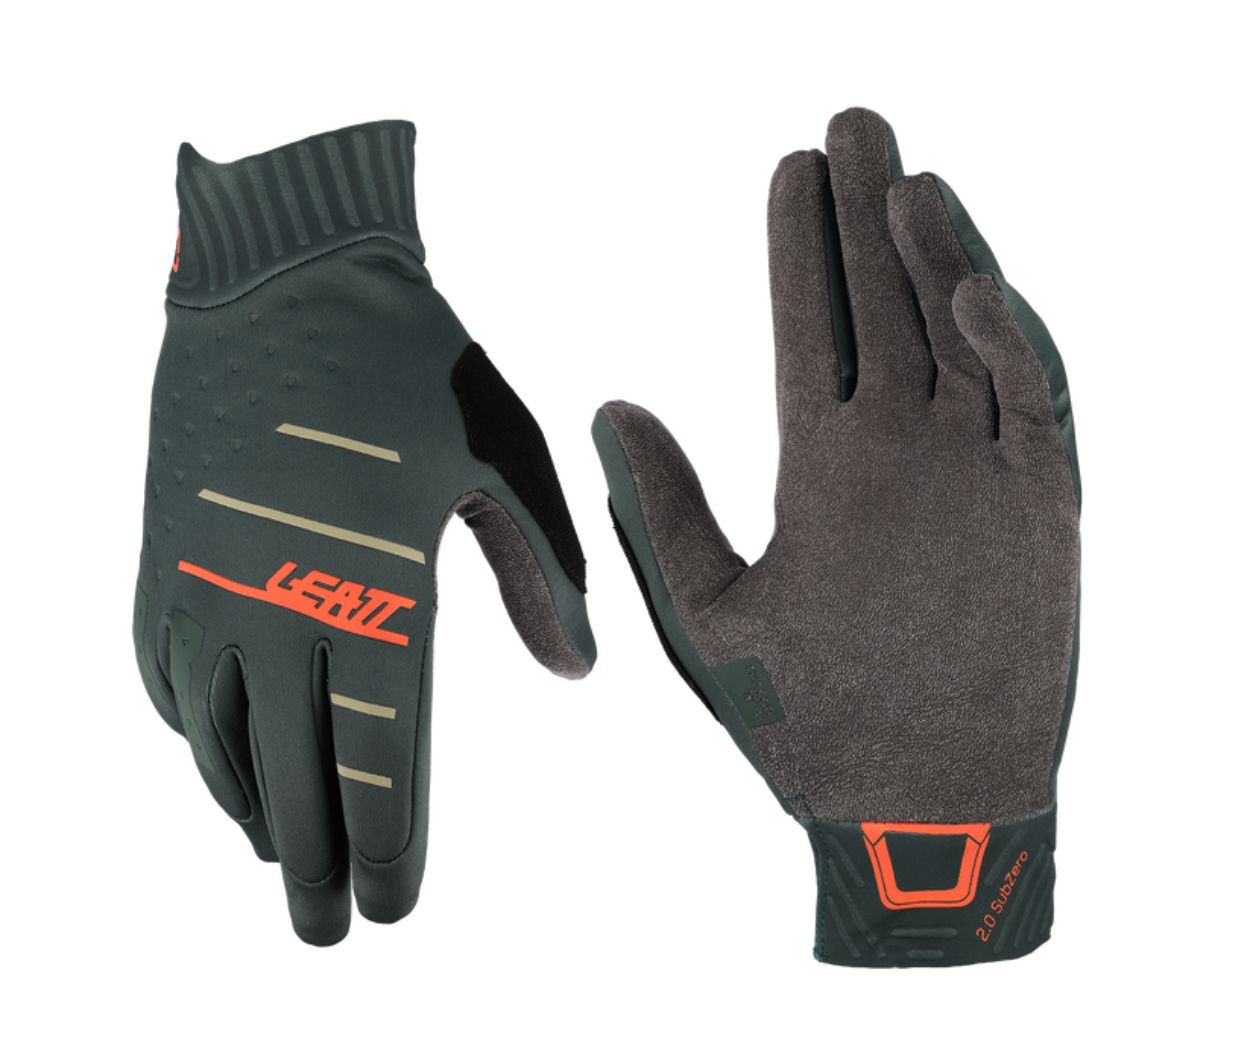 Leatt Protection Glove 2.0 SubZero